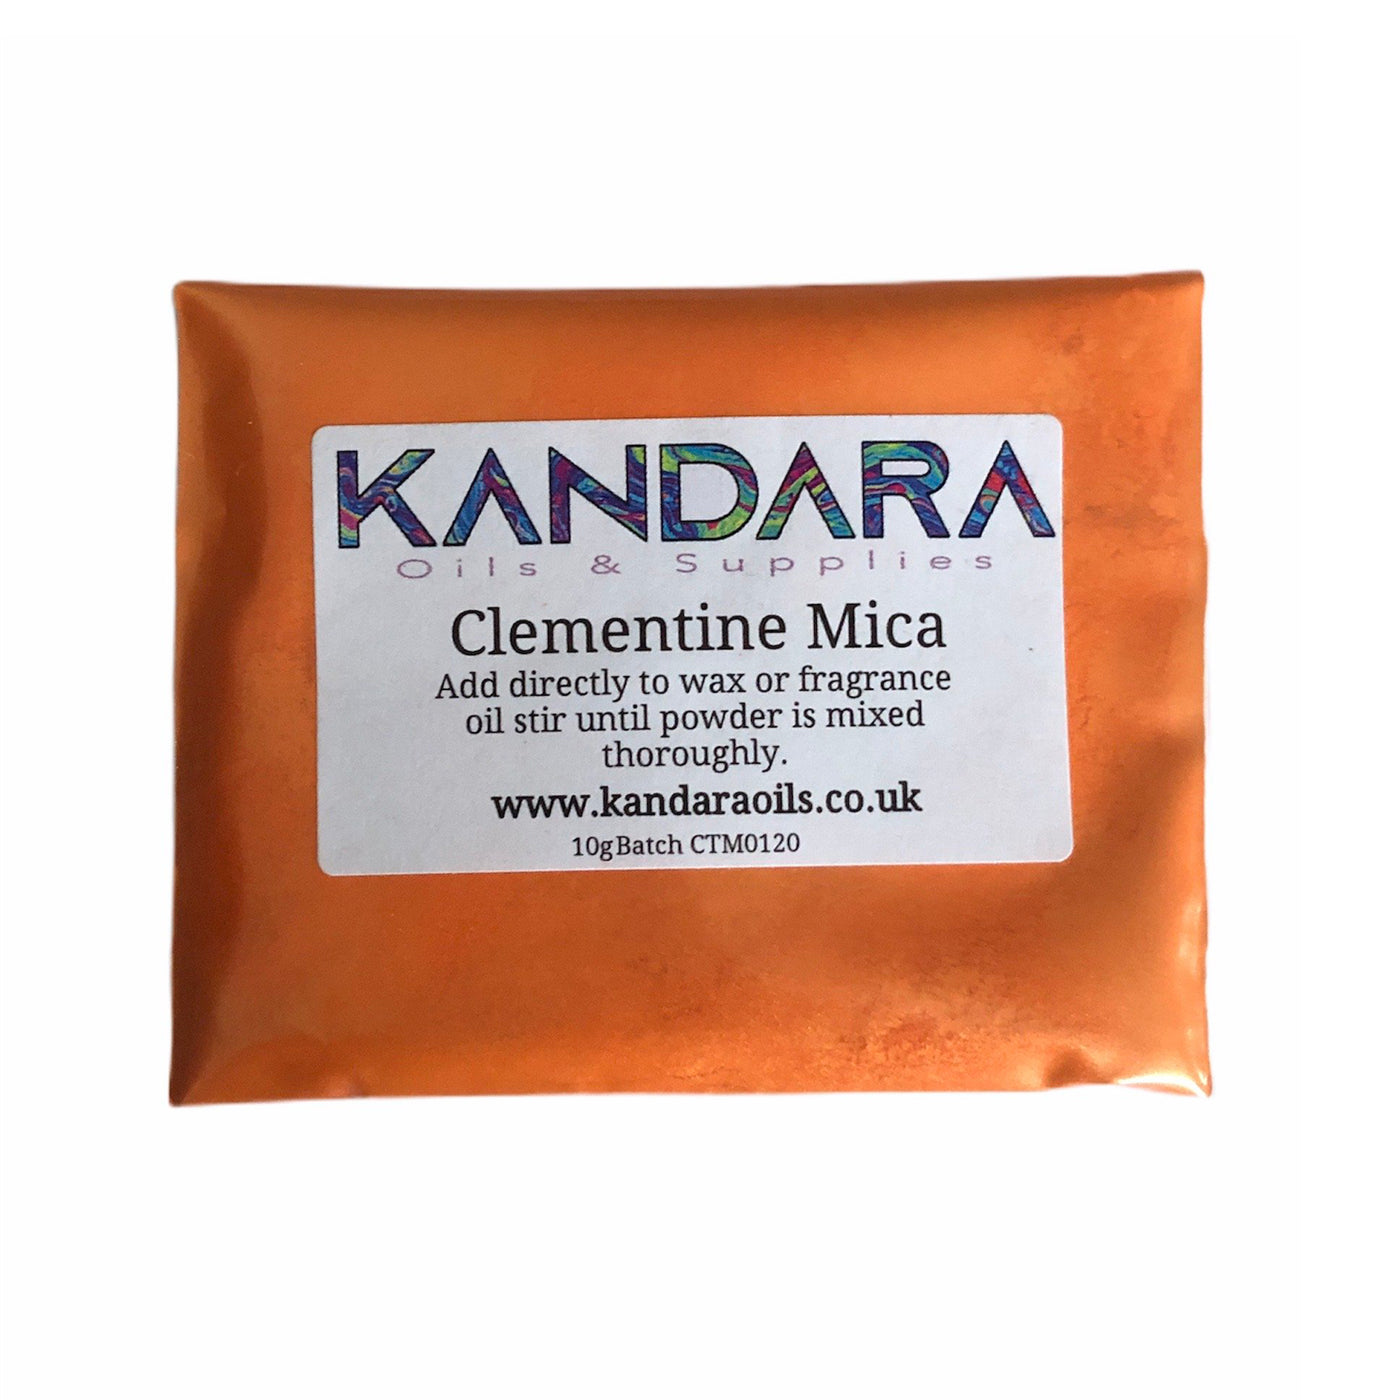 Clementine Mica